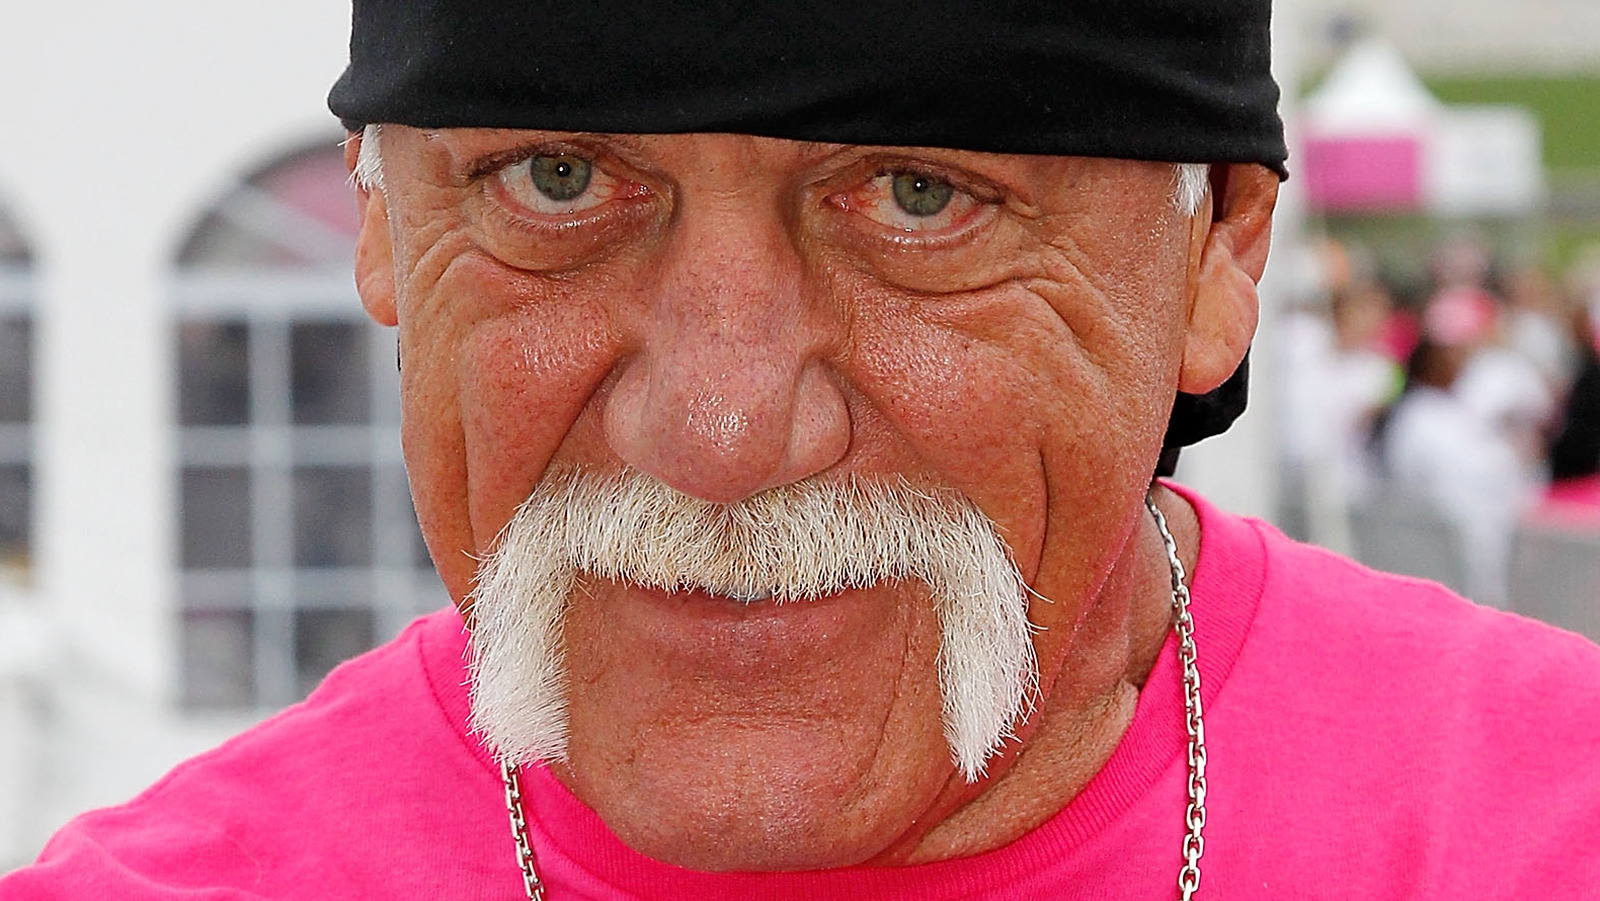 What Is Hulk Hogan’s Real Name?